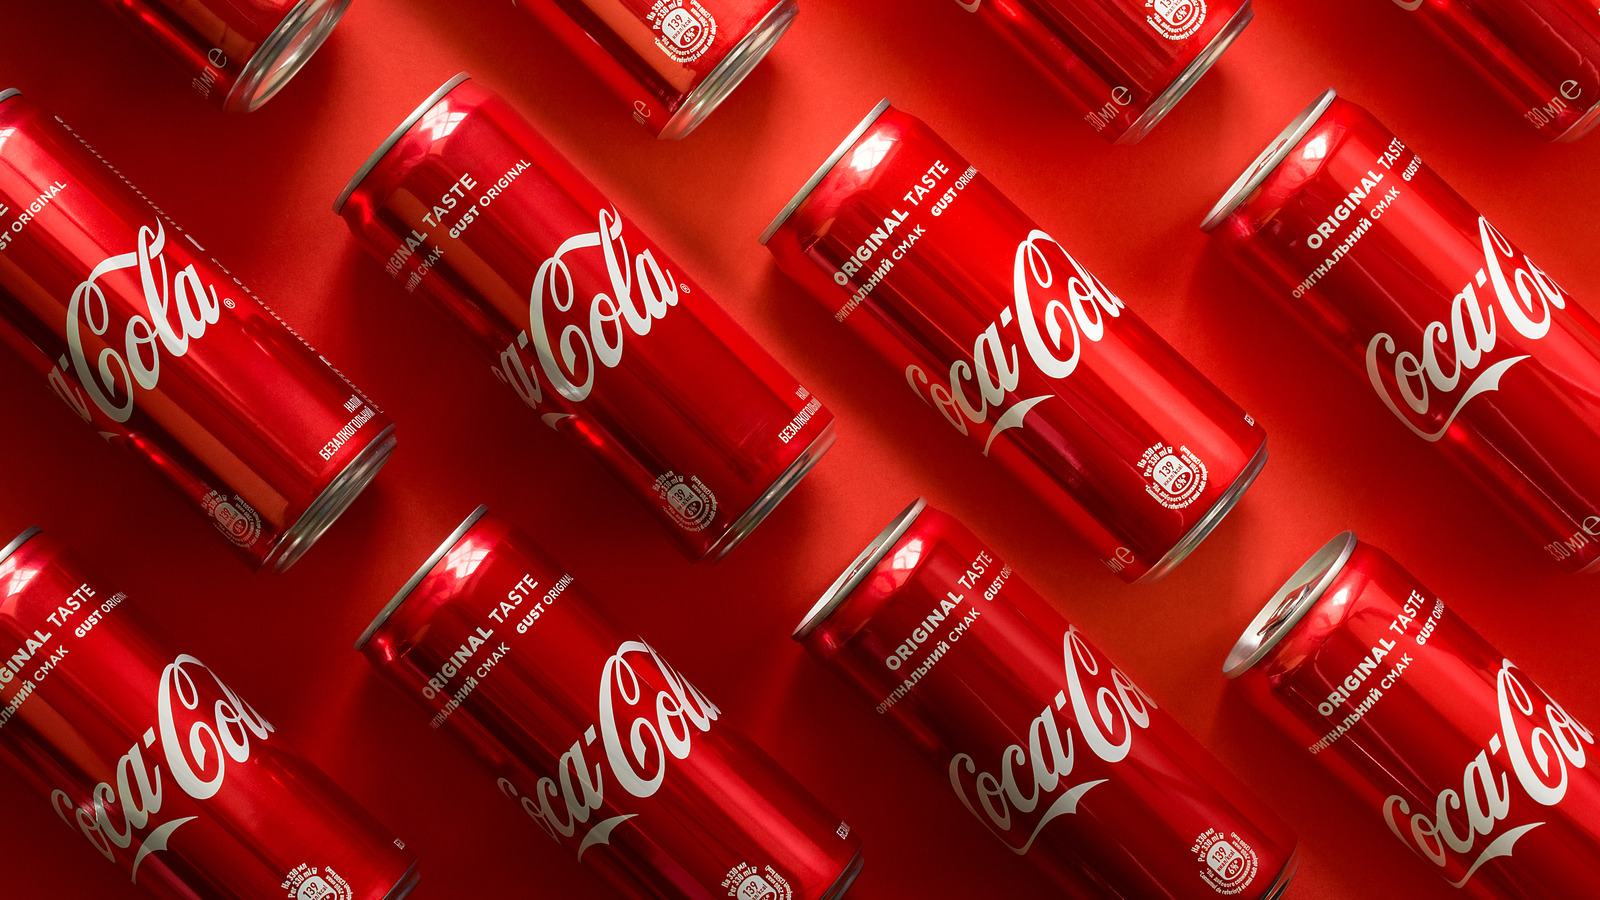 Coca Cola Hacks You Need To Start Using